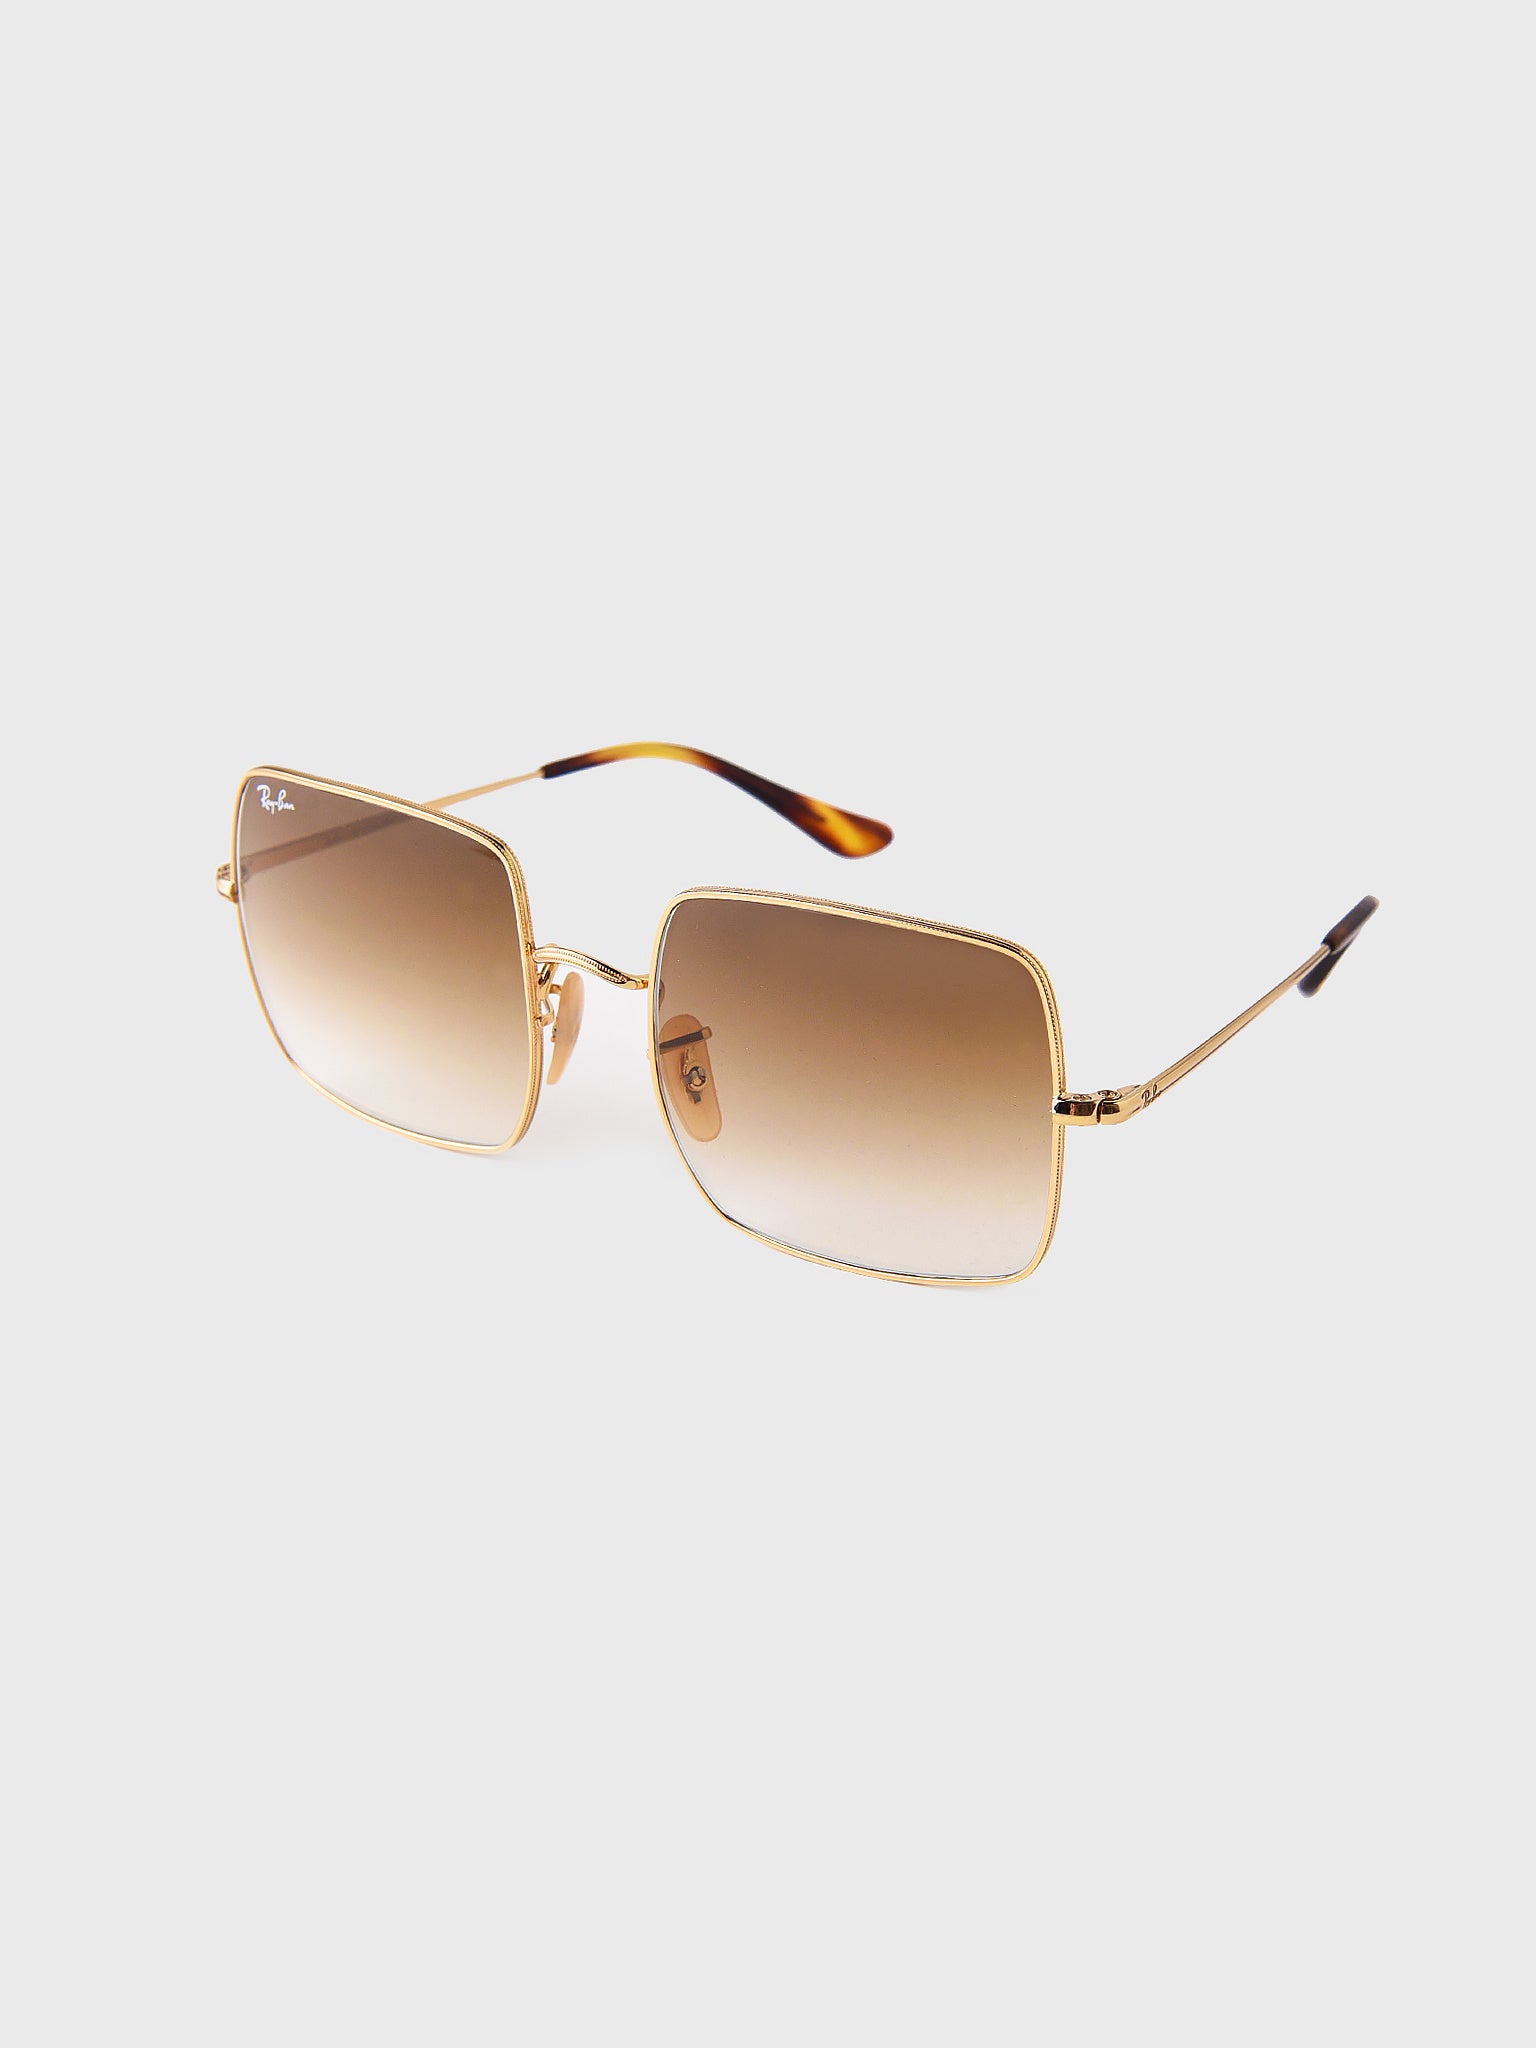 Ray-Ban Square 1971 Classic Sunglasses - Saint Bernard